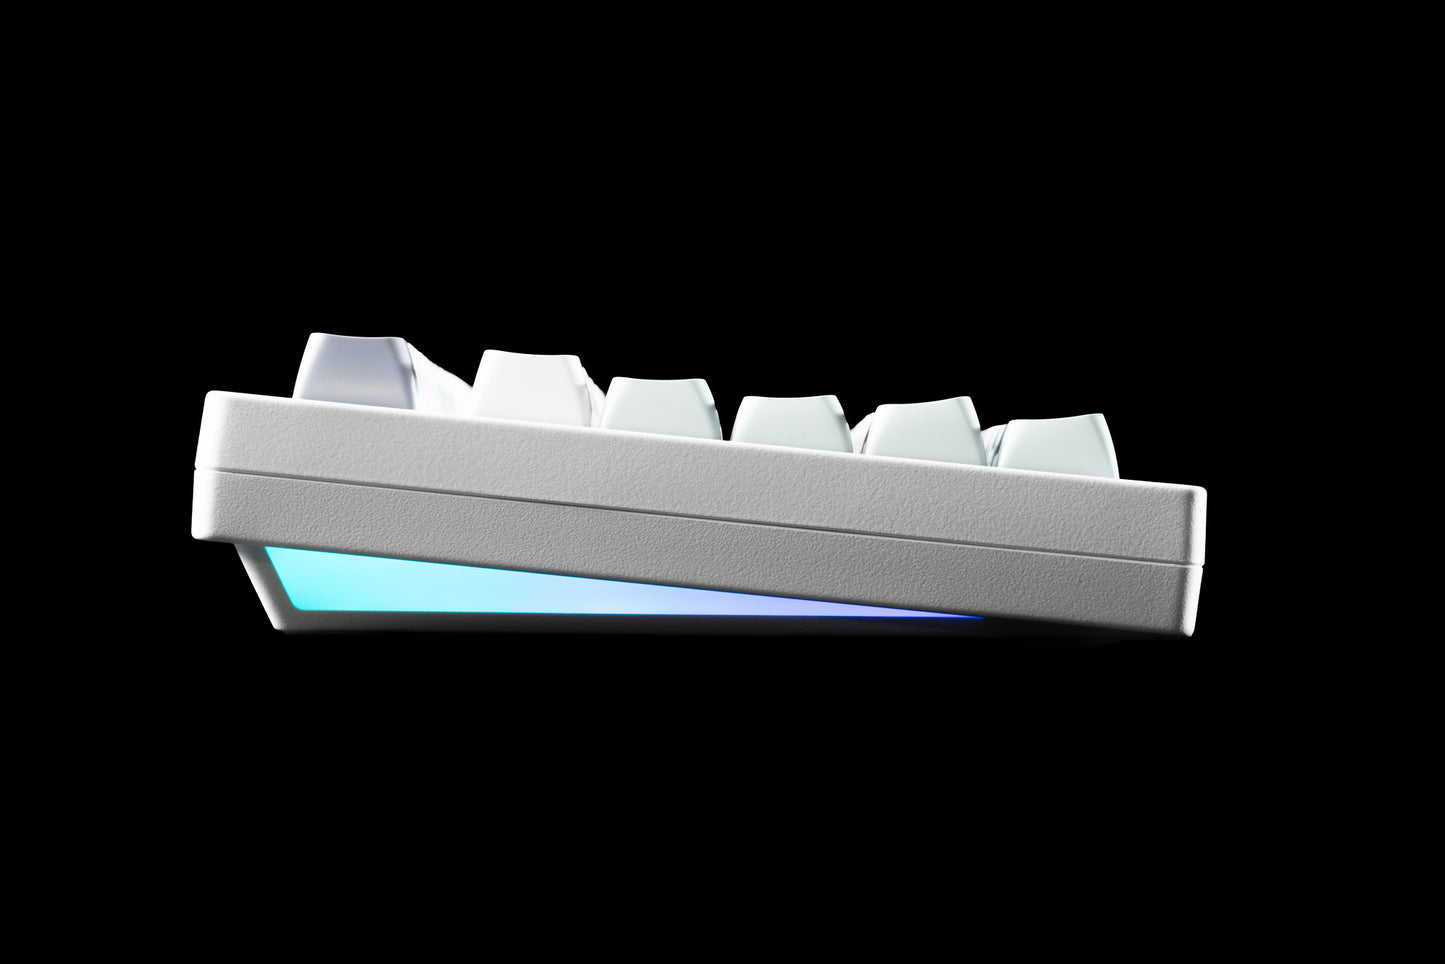 [PRE-ORDER] VELOCIFIRE RX870 WIRELESS 2.4G RGB MECHANICAL KEYBOARD